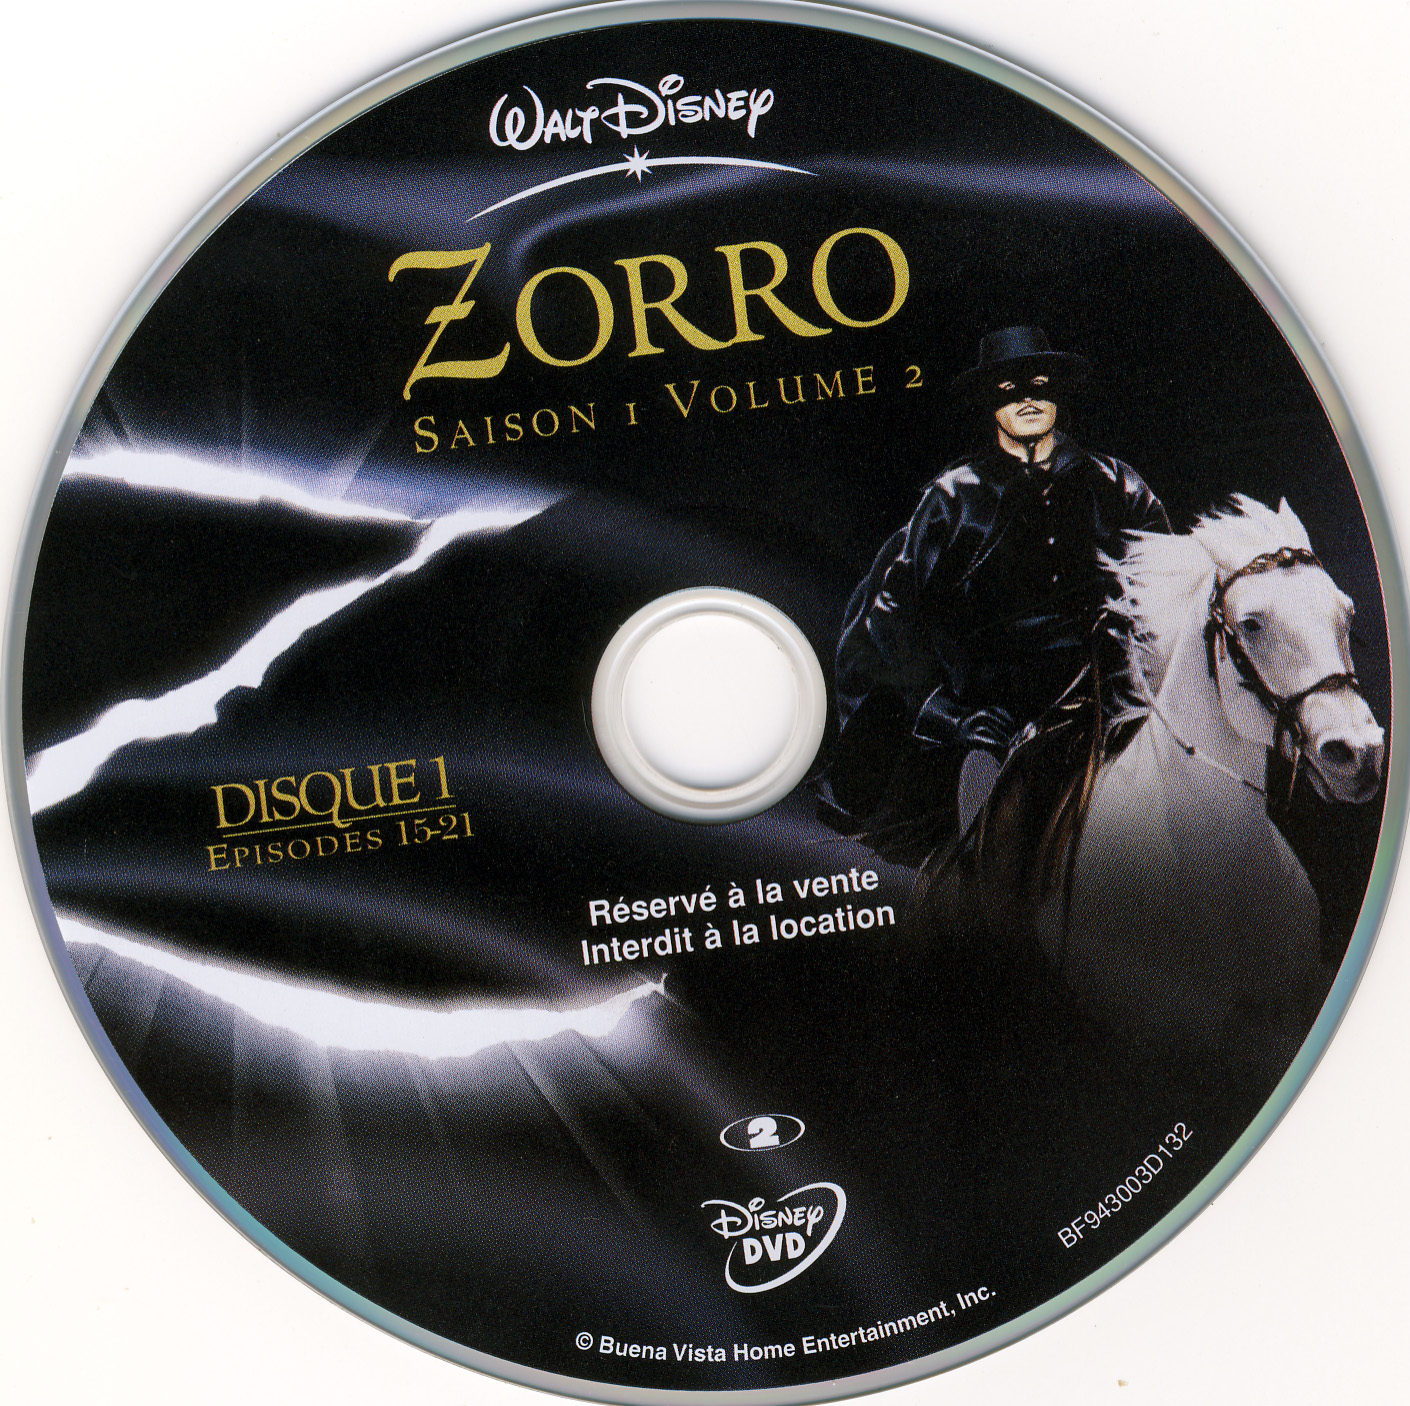 Zorro Saison 1 vol 2 DISC 1